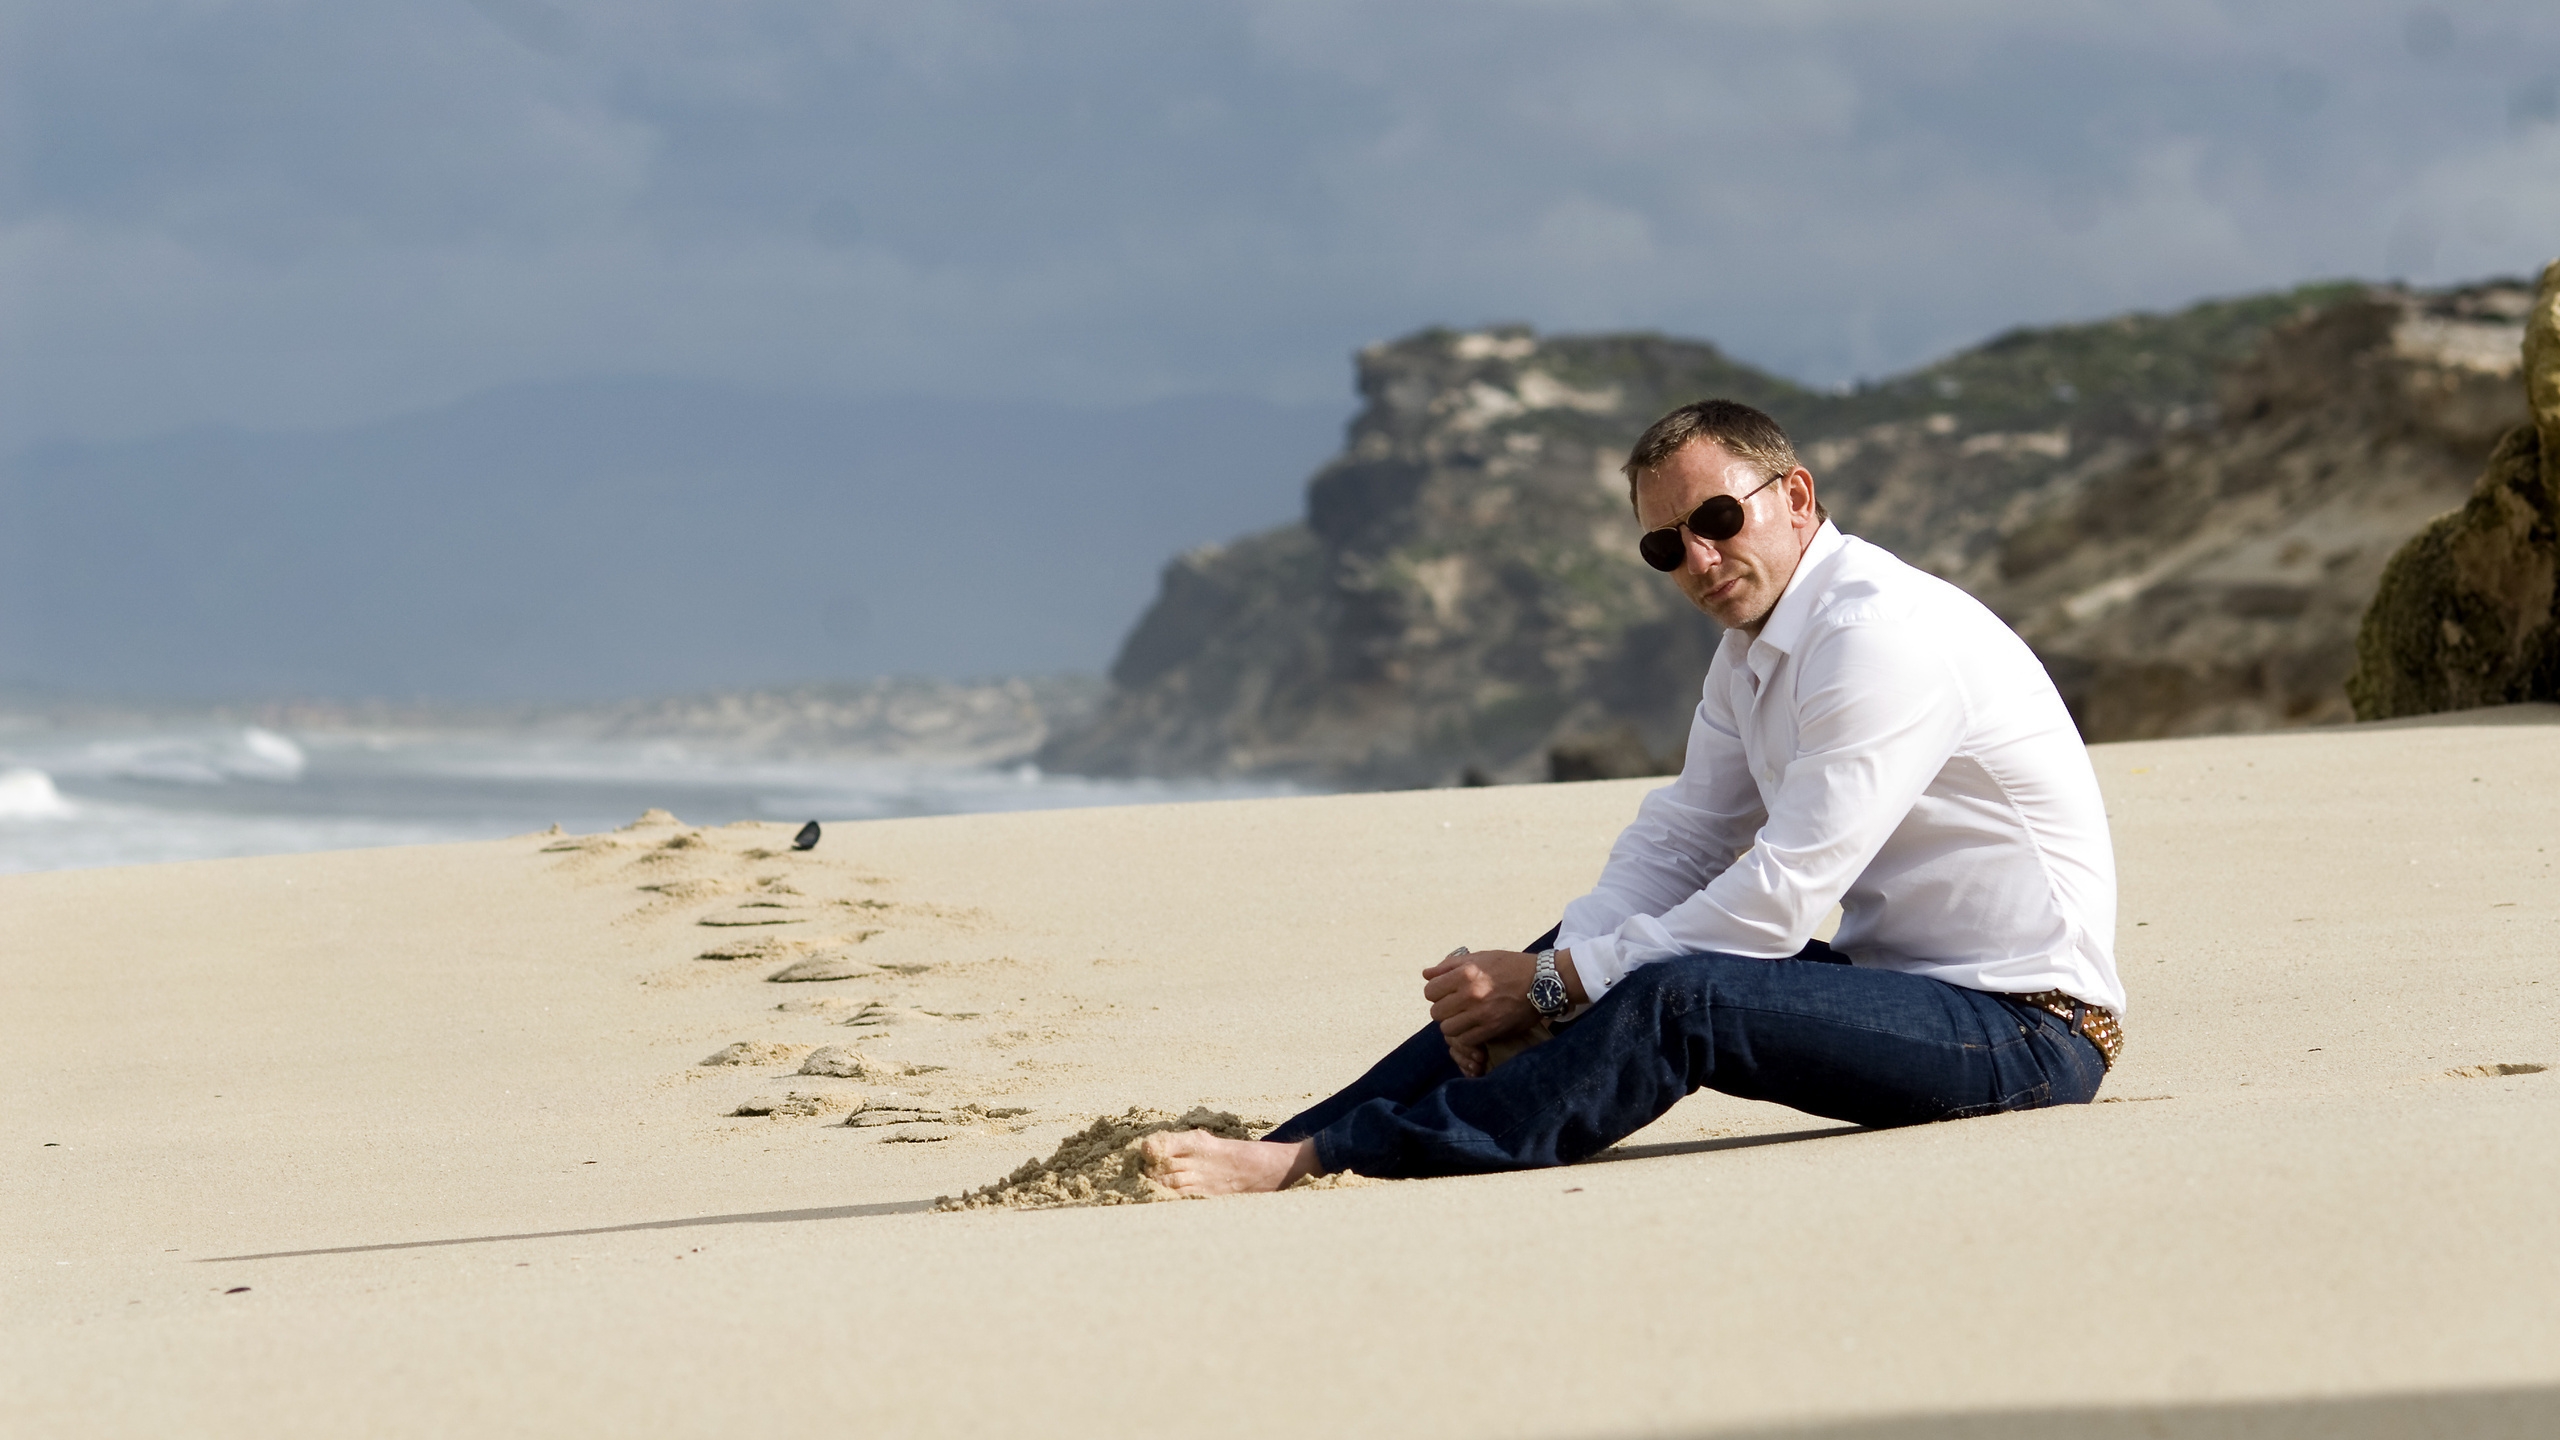 Daniel Craig on the Beach for 2560x1440 HDTV resolution